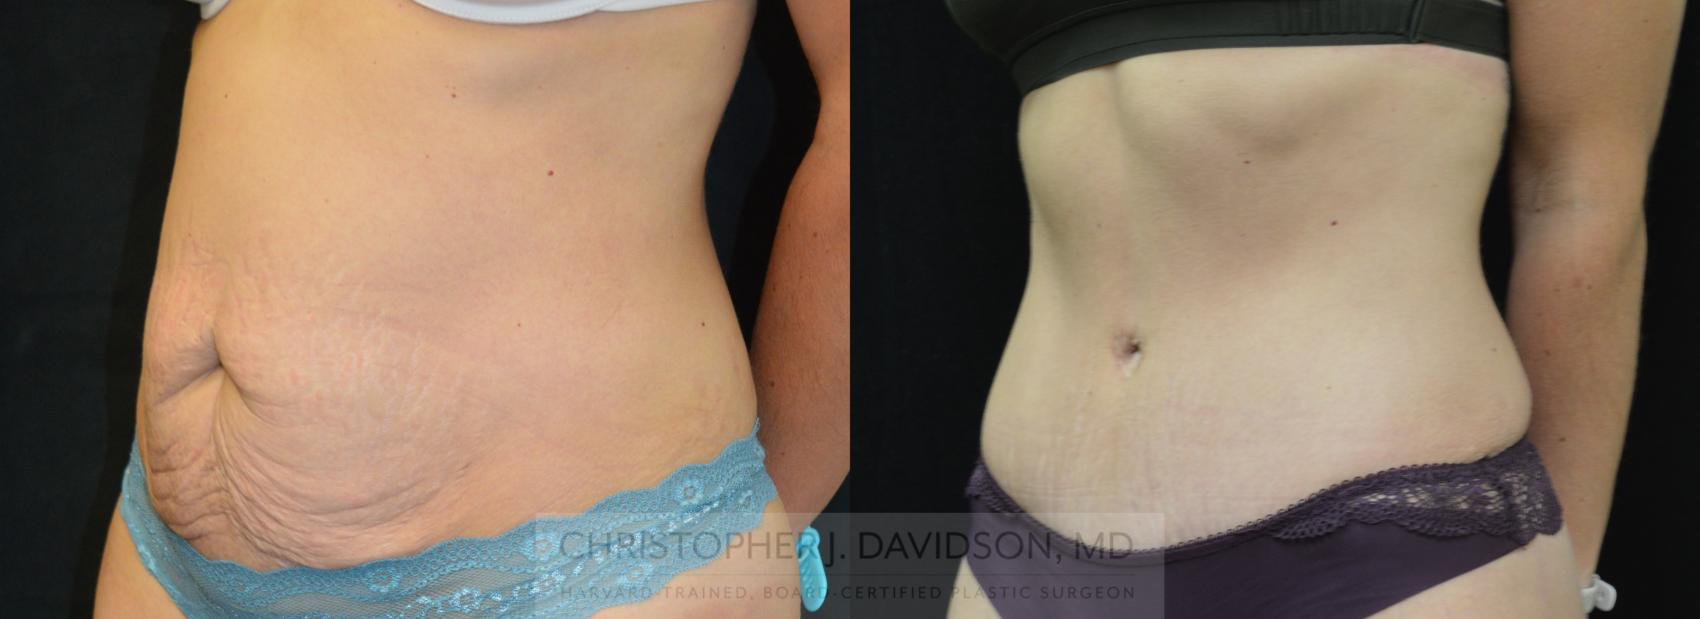 Tummy Tuck (Abdominoplasty) Case 262 Before & After Left Oblique | Boston, MA | Christopher J. Davidson, MD